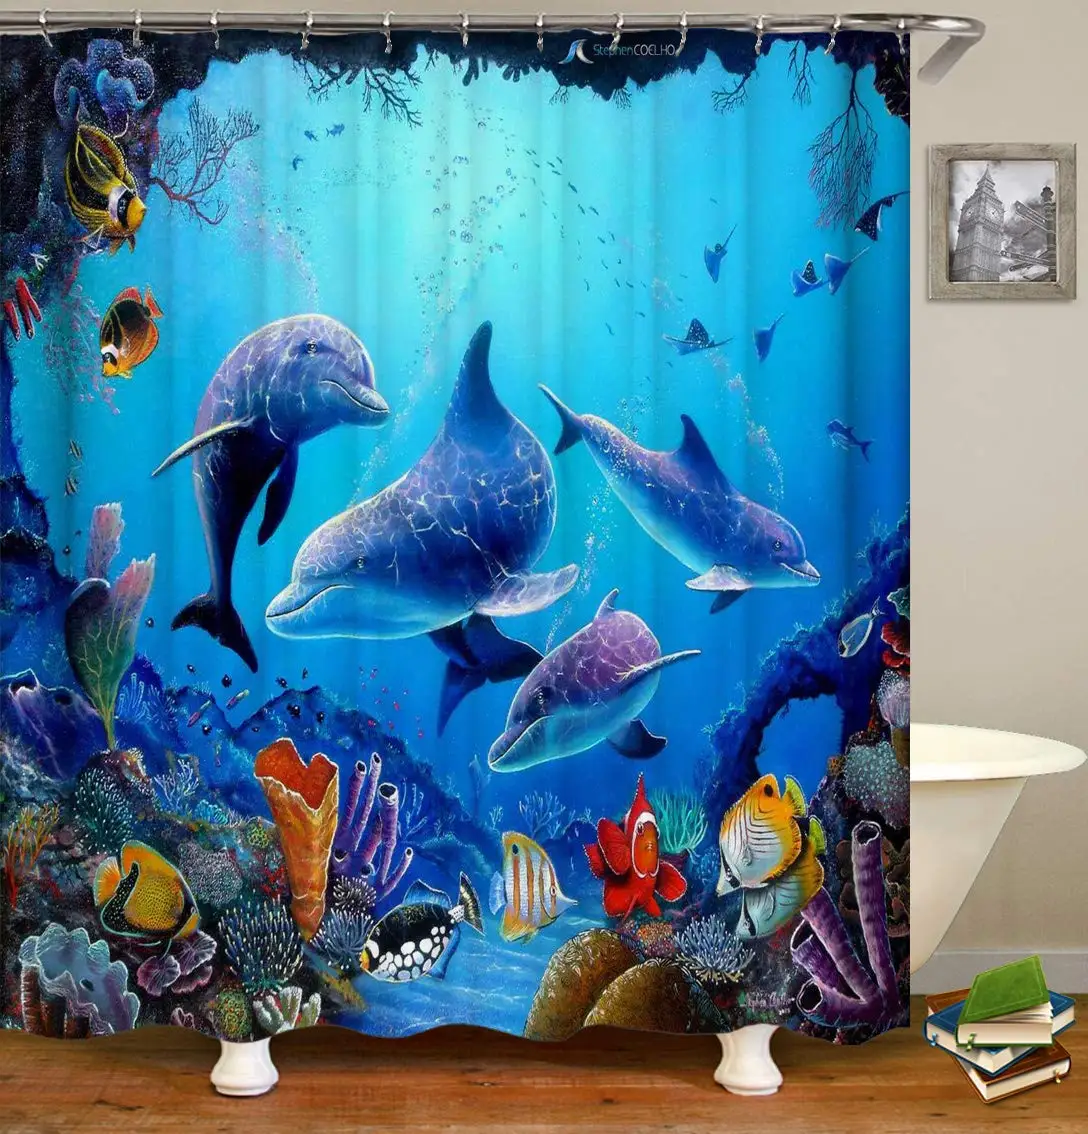 

Dolphin Shower Curtain, Blue Underwater World Marine Life , Polyester Fabric Kids Ocean Theme Bathroom Decor Set with 12 Hooks